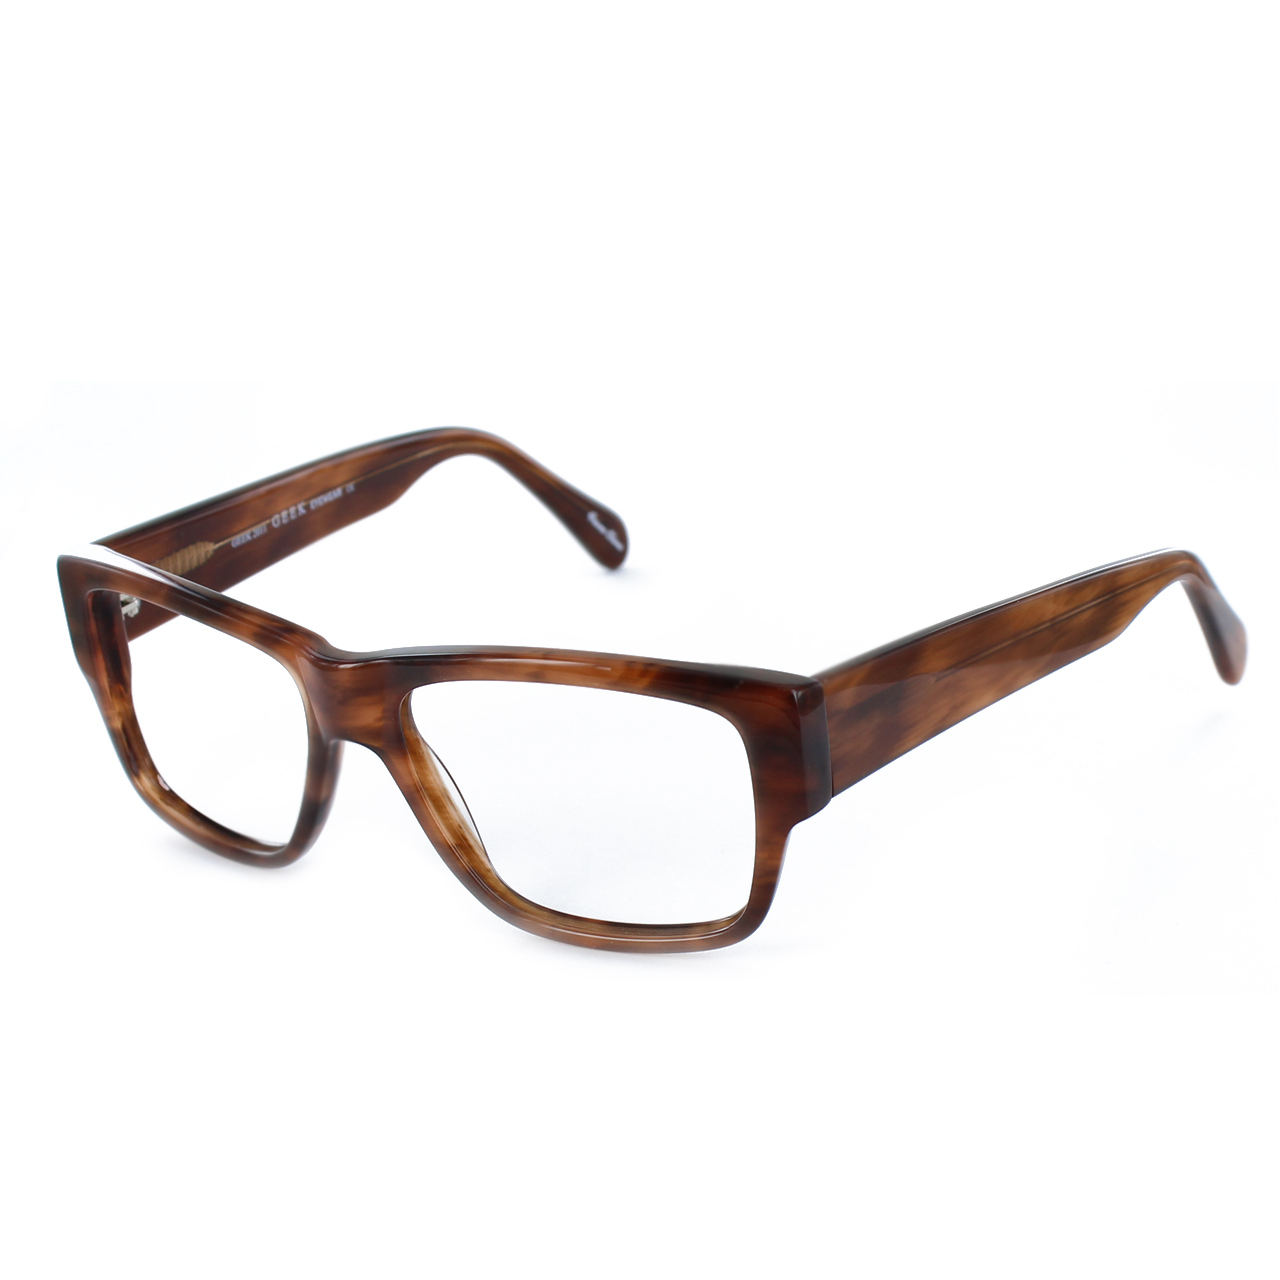 Geek Eyewear® Rx Eyeglasses Ready To Wear Specs For Music Film Internet Dj Star Wars And 